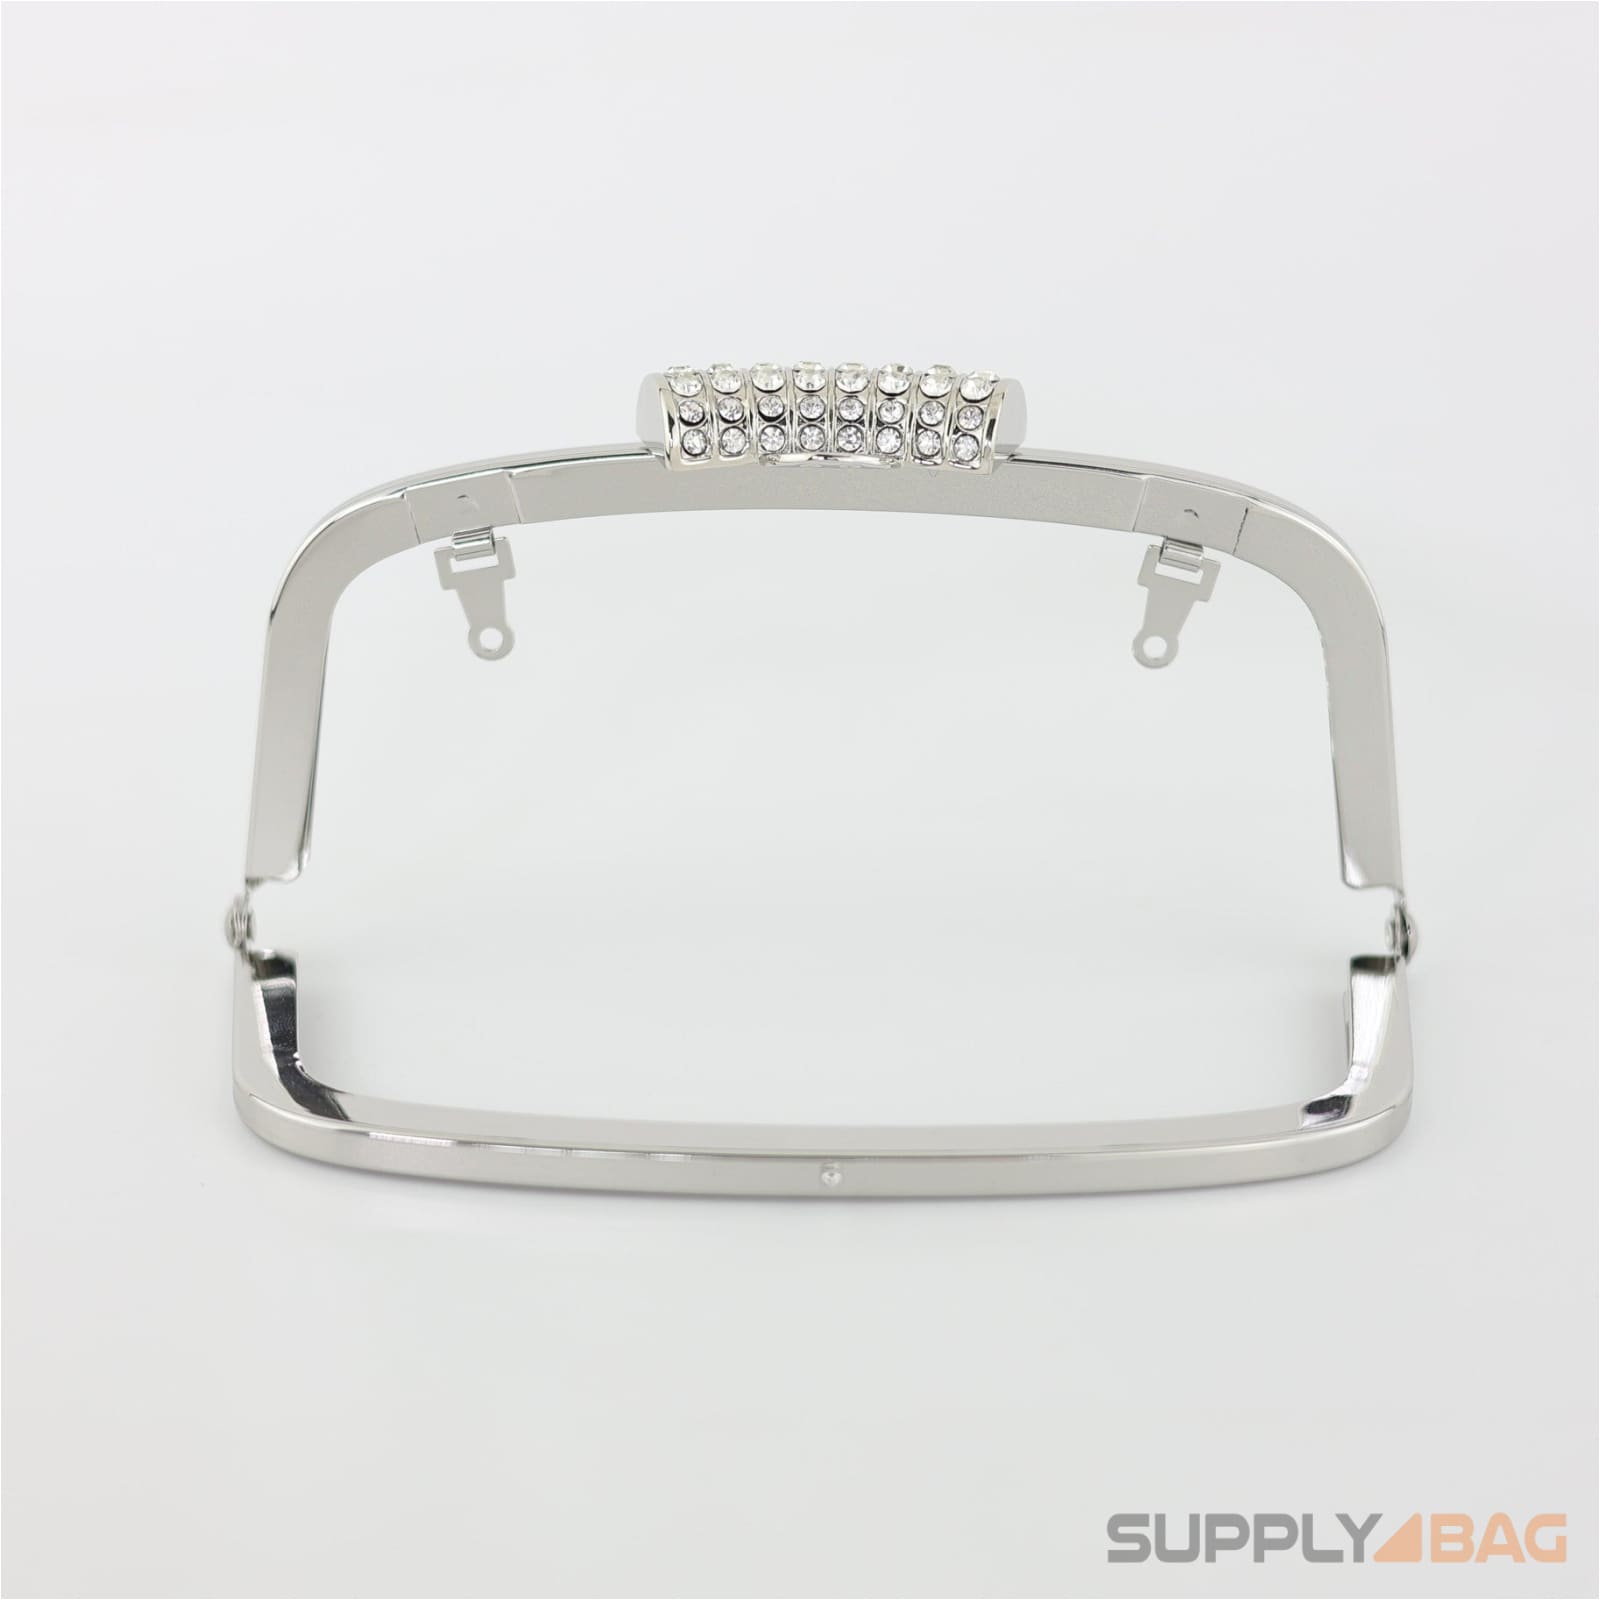 6 x 2 3/4 inch - rhinestone closure silver metal purse frame